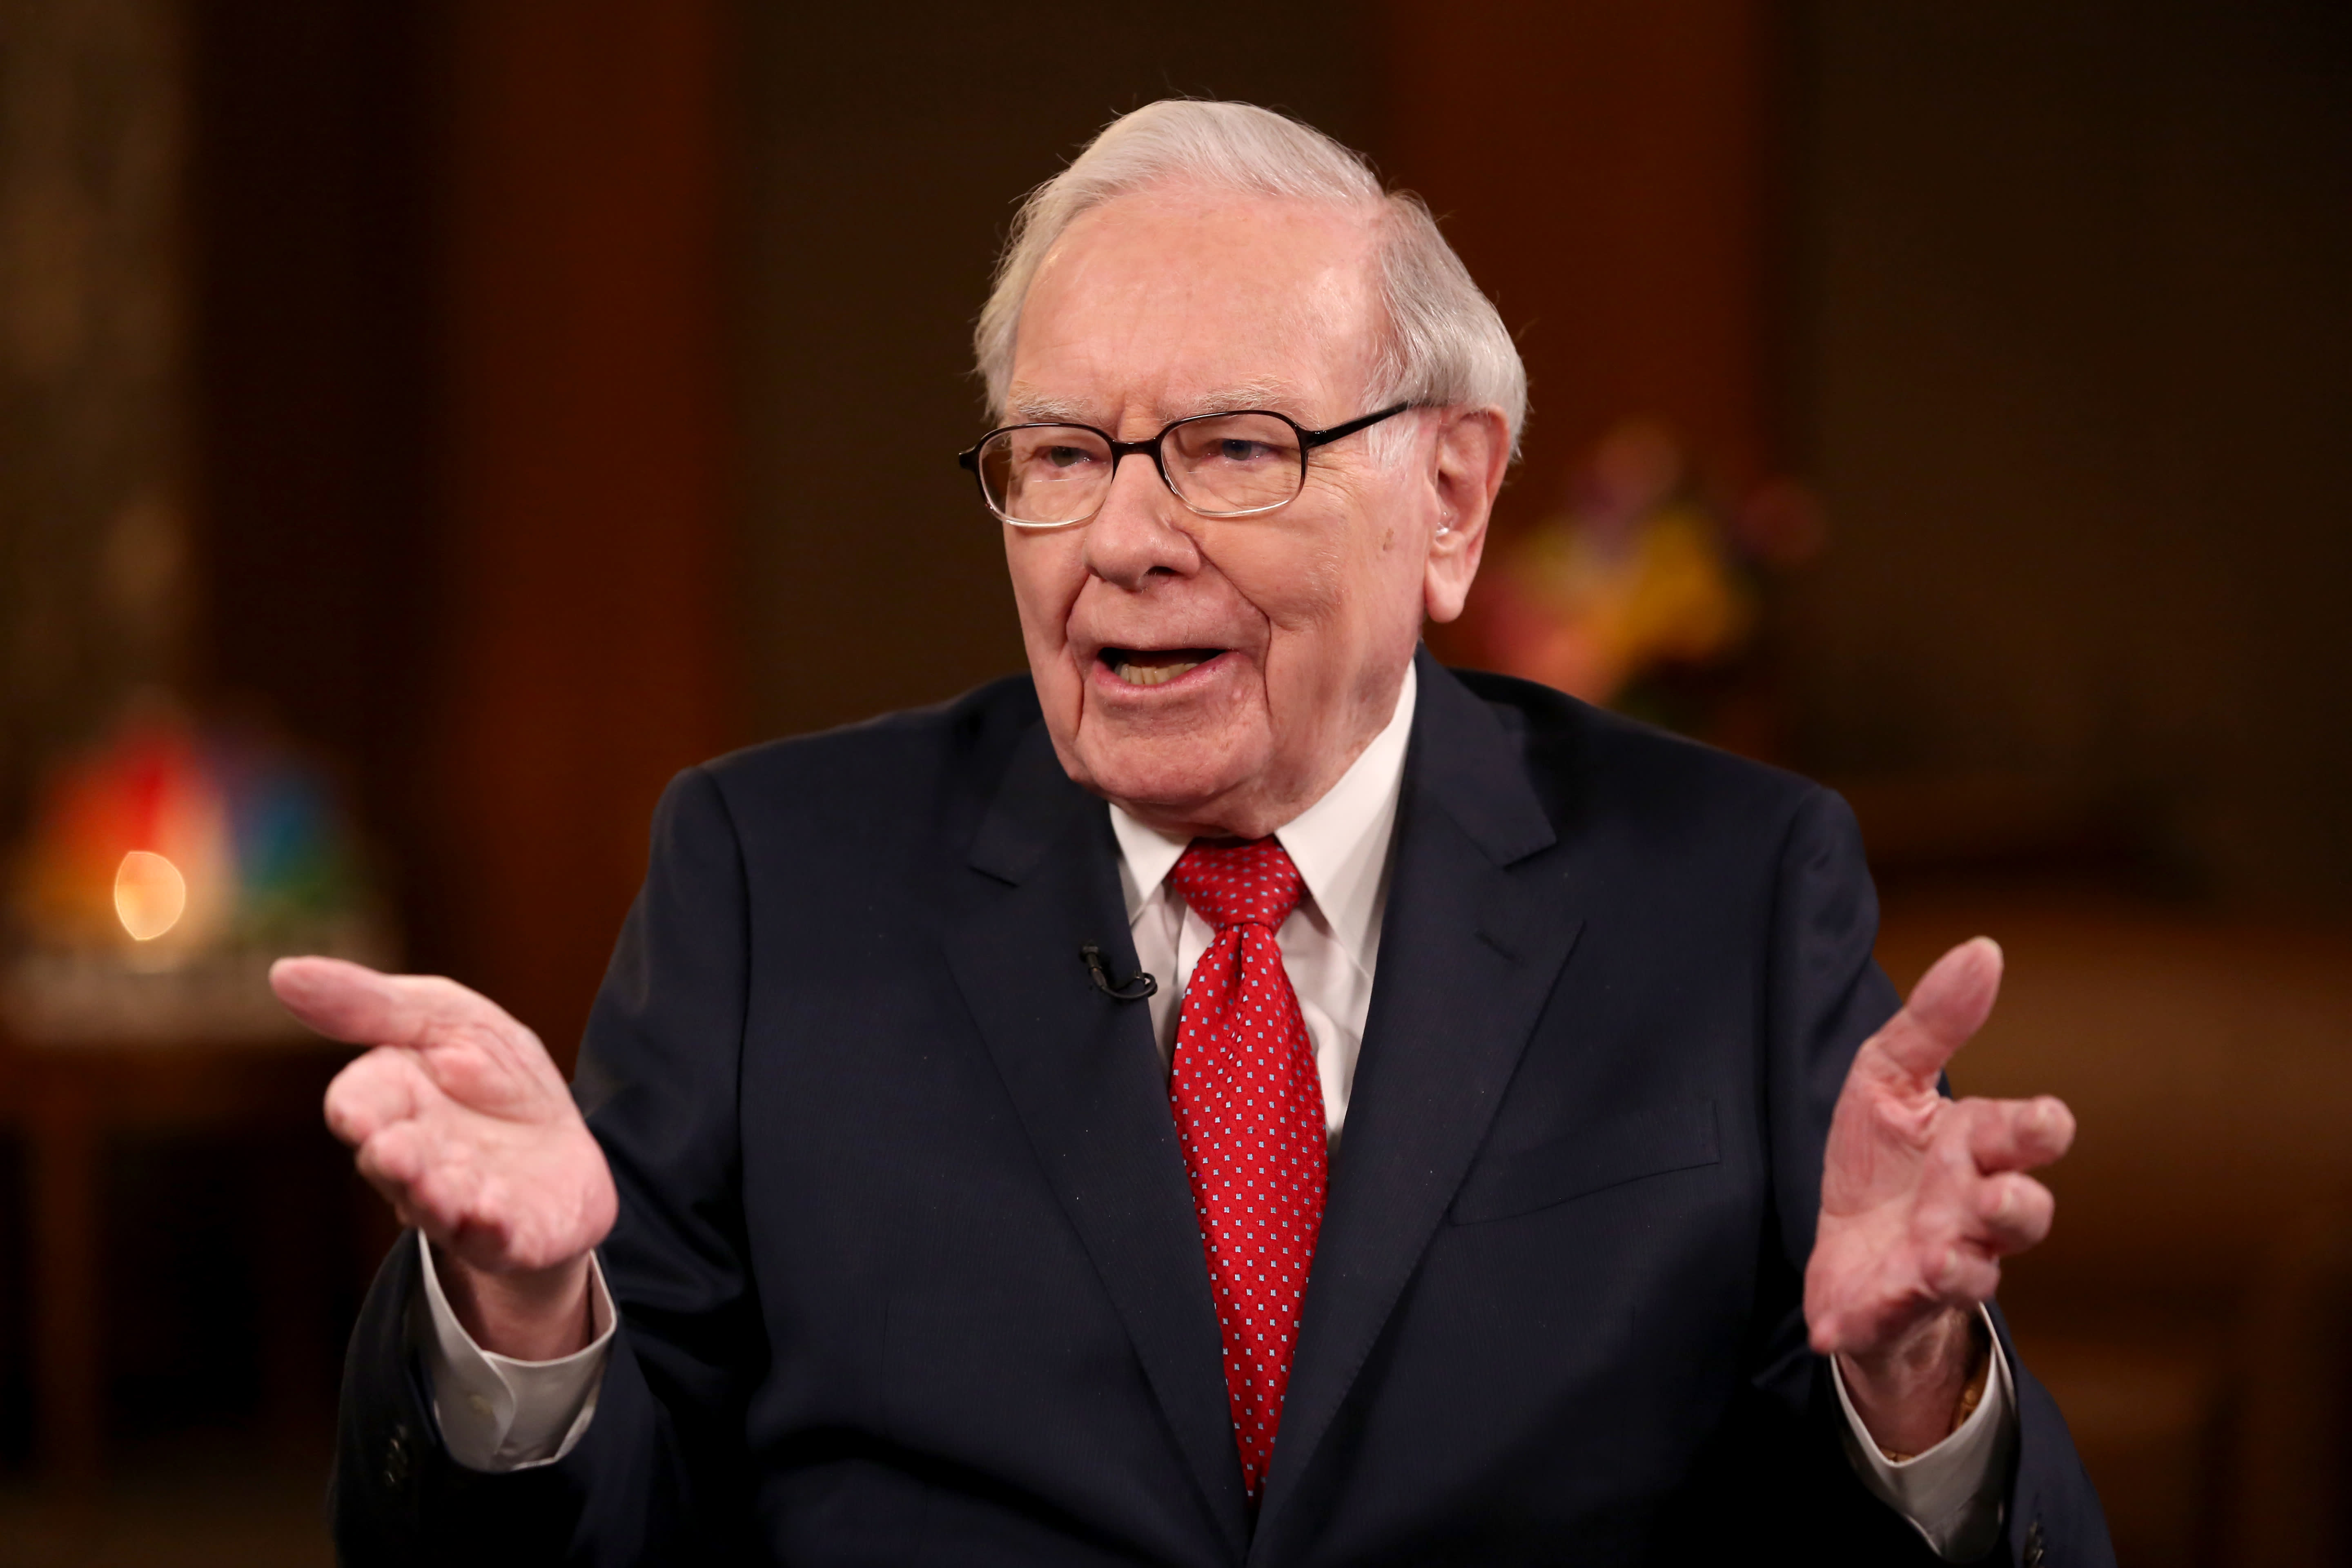 Warren Buffett career advice: Seek personal happiness over pure profit